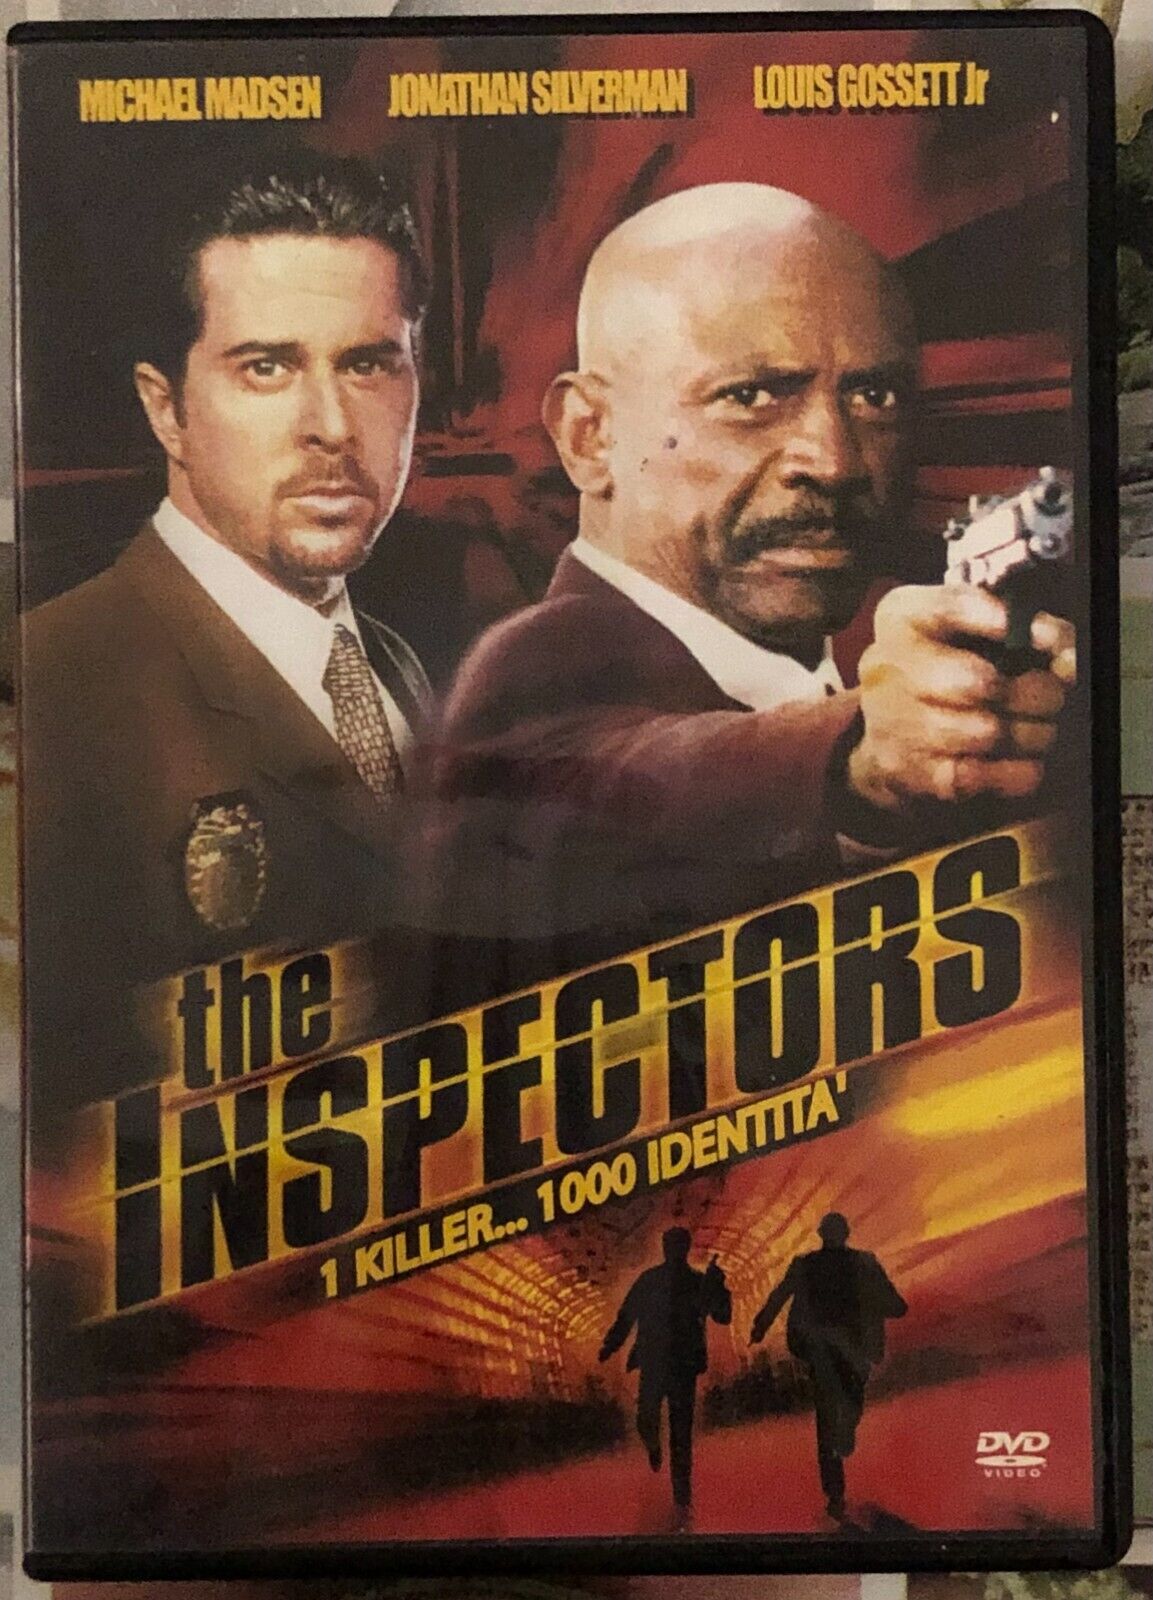 The inspectors - 1 killer... 1000 identit? DVD di Brad Turner, 2000, Showtime